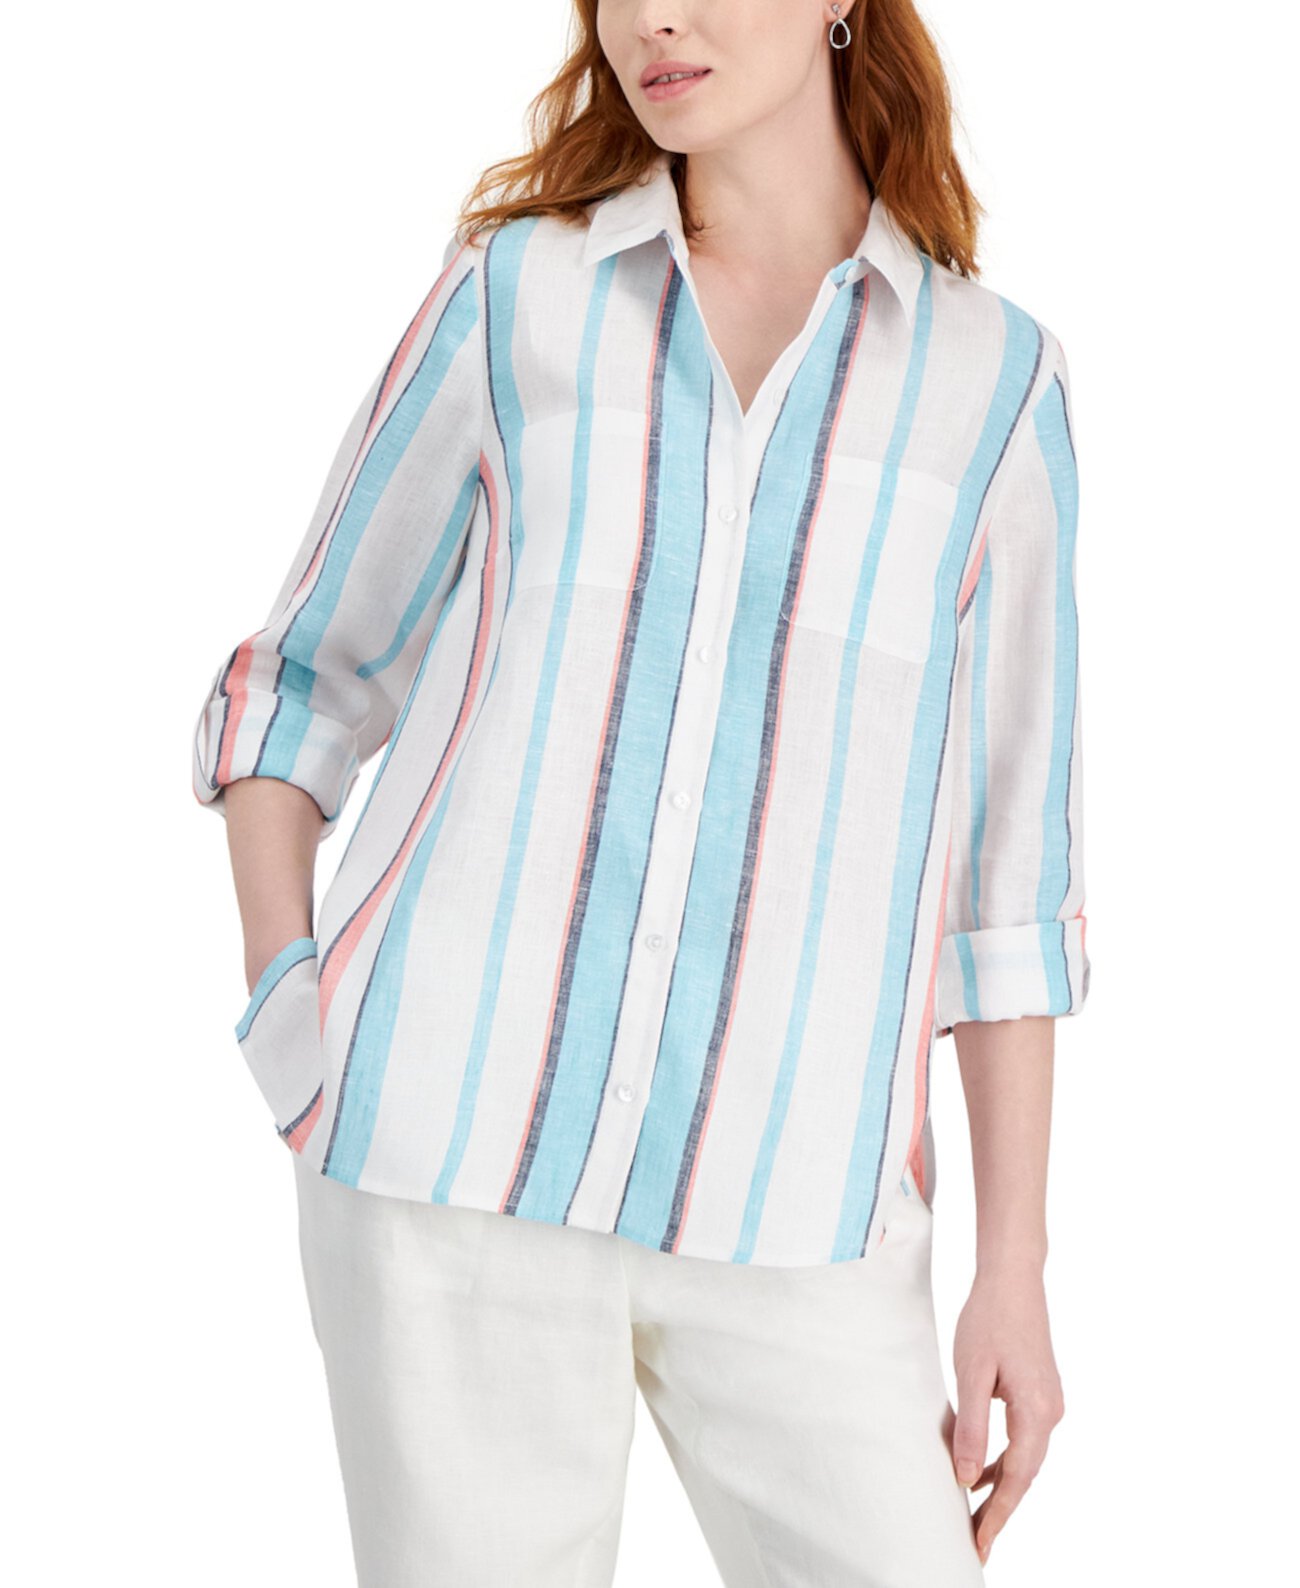 Women's 100% Linen Hampton Stripe Tab-Sleeve Top, Created for Macy's Charter Club